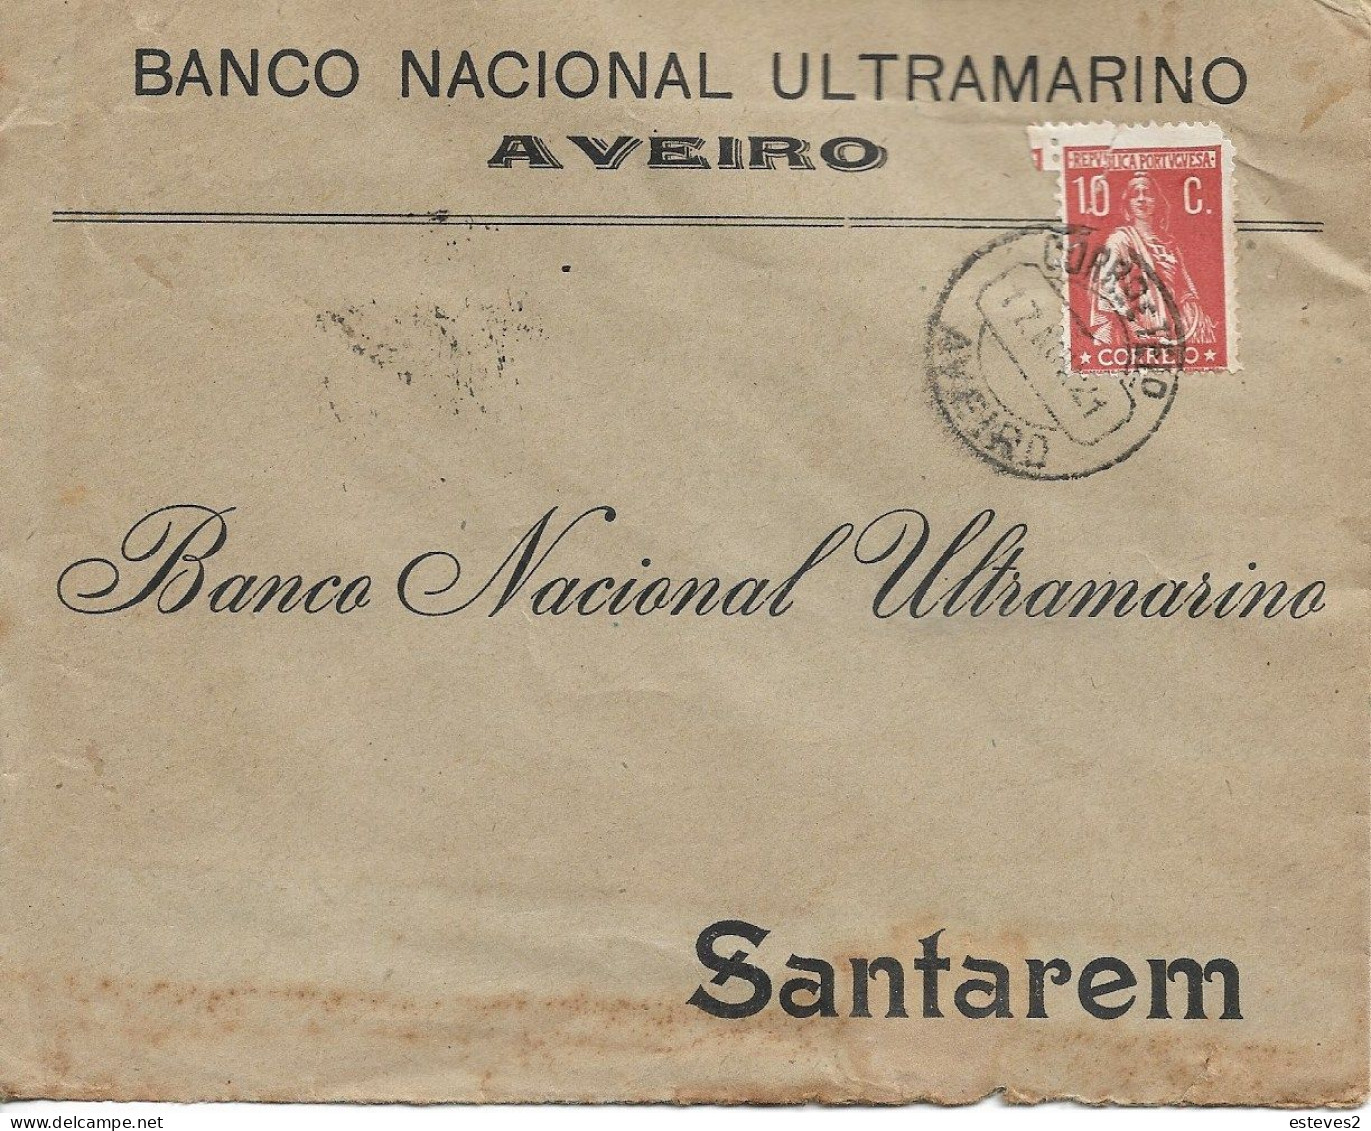 BANCO NACIONAL ULTRAMARINO , 1921 , Commercial Cover From Aveiro To Santarém , Ceres Stamp - Portugal